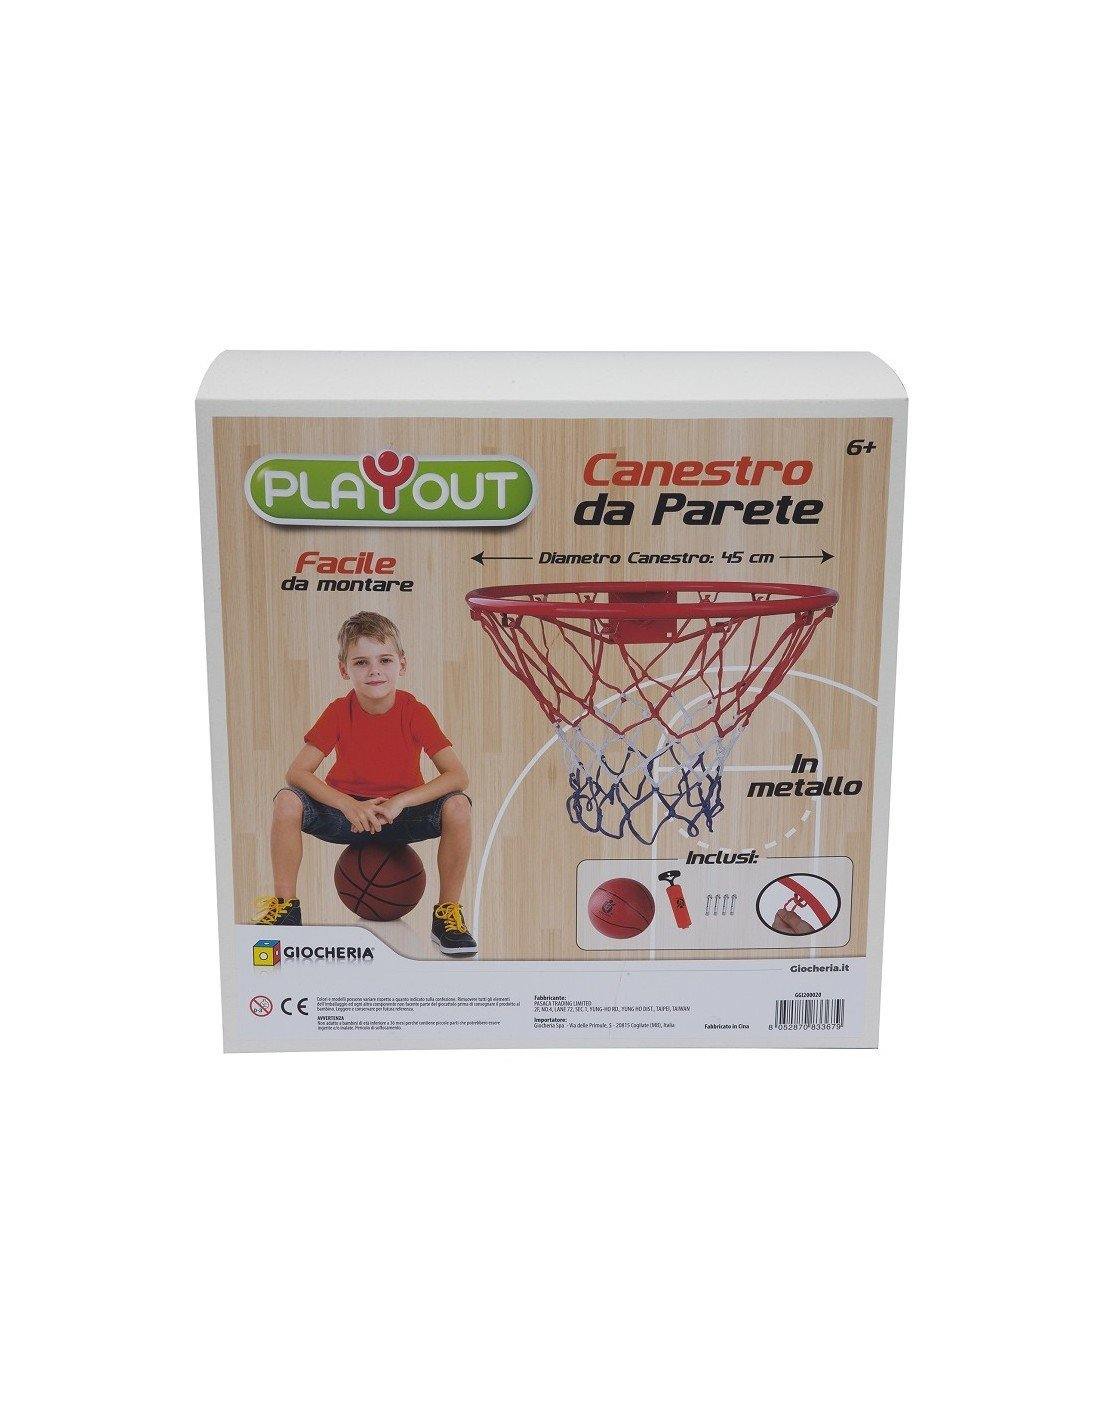 Play Out - Basket Canestro - toysvaldichiana.it